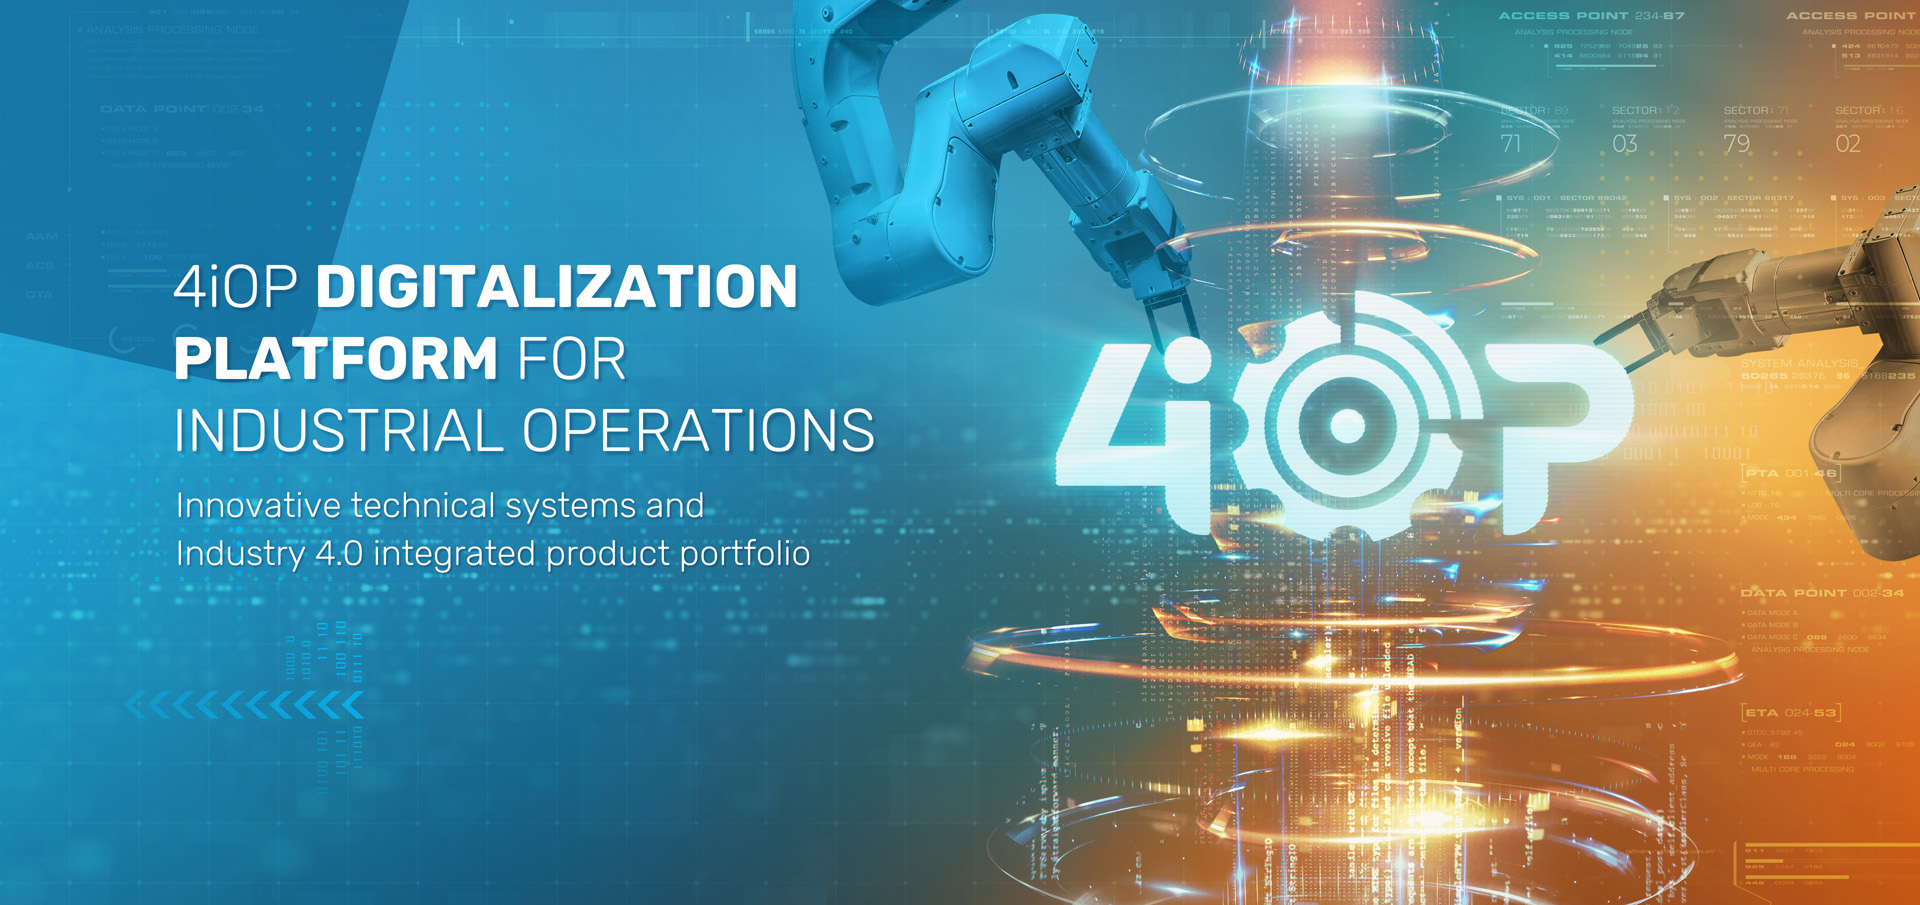 4iG's 4iOP digitalization platform for Industrial Operations